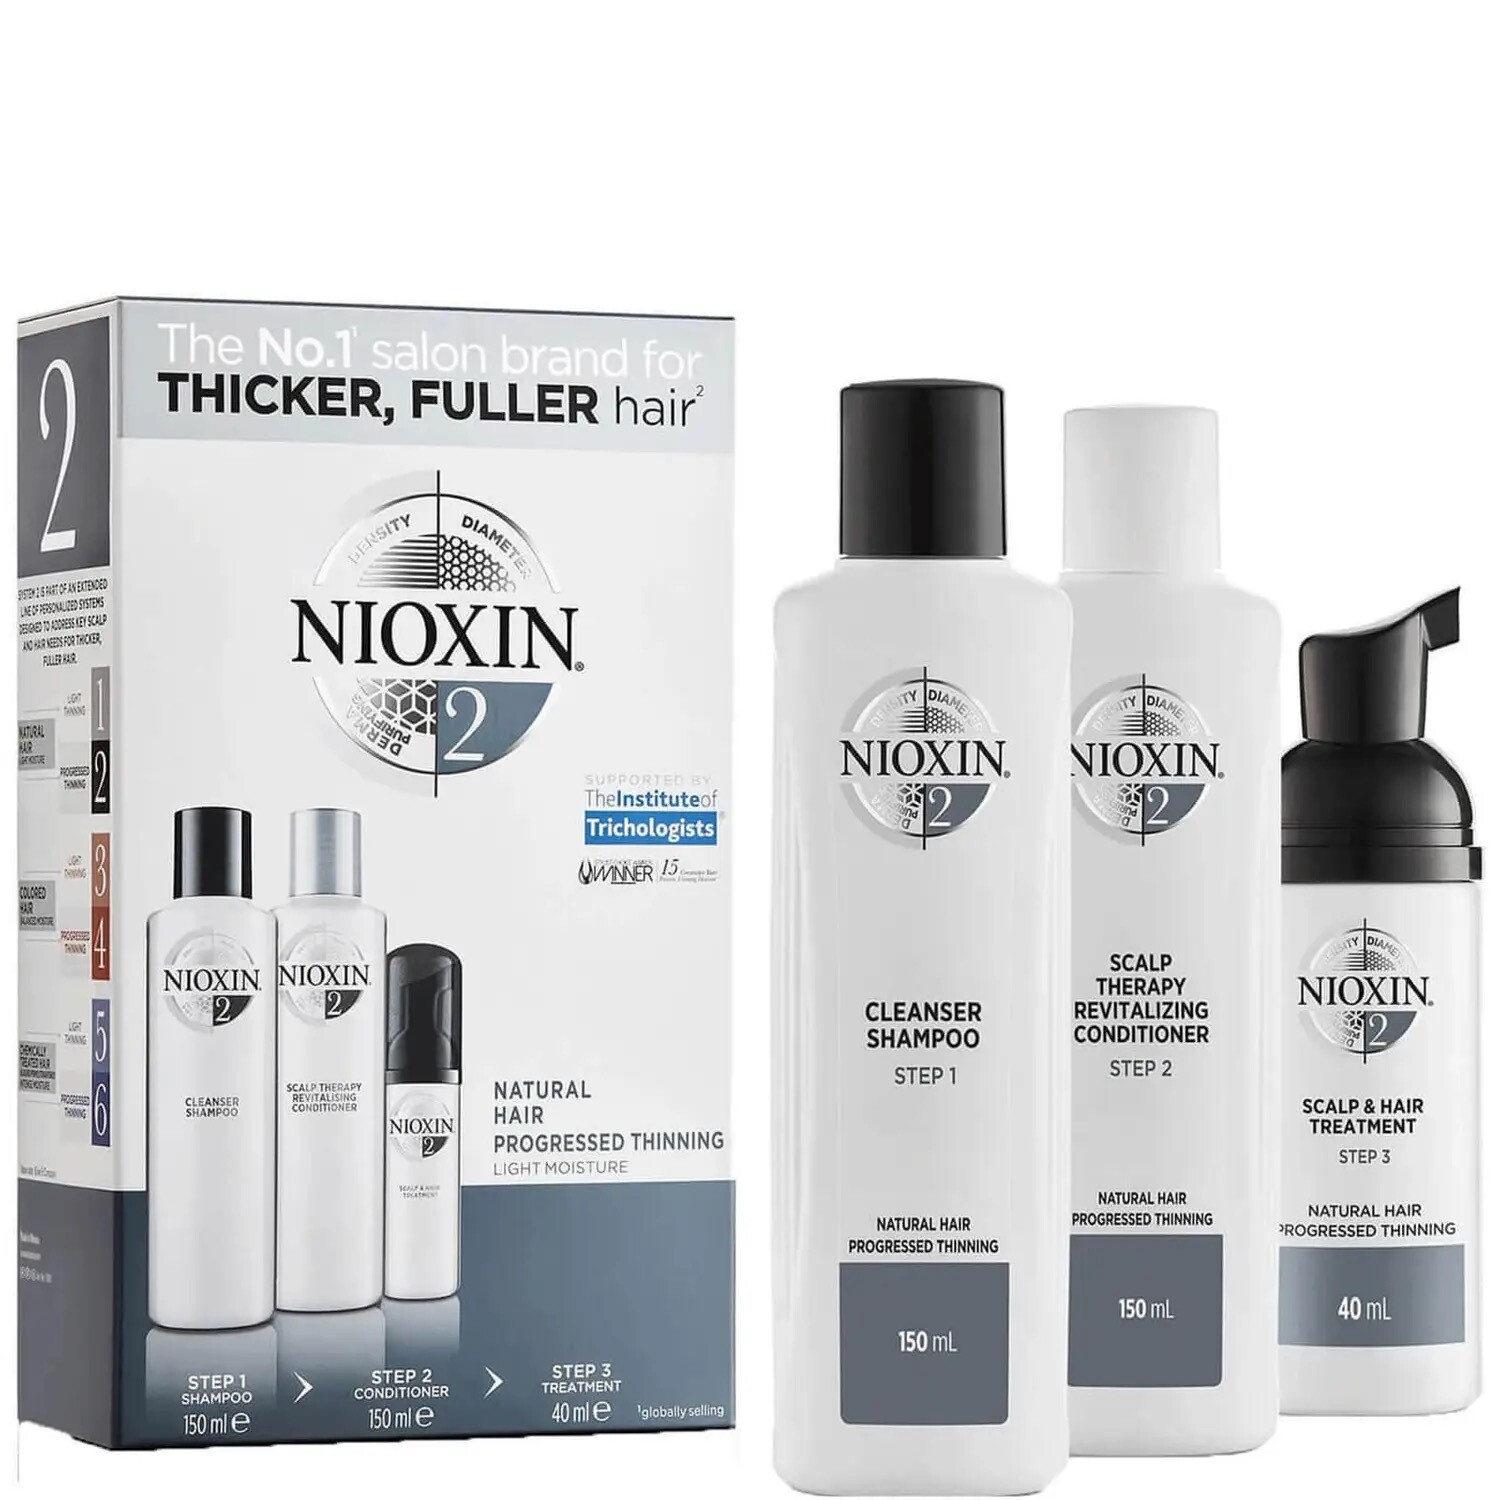 Nioxin Kit System 2 - Natural Hair (Progressed Thinning)